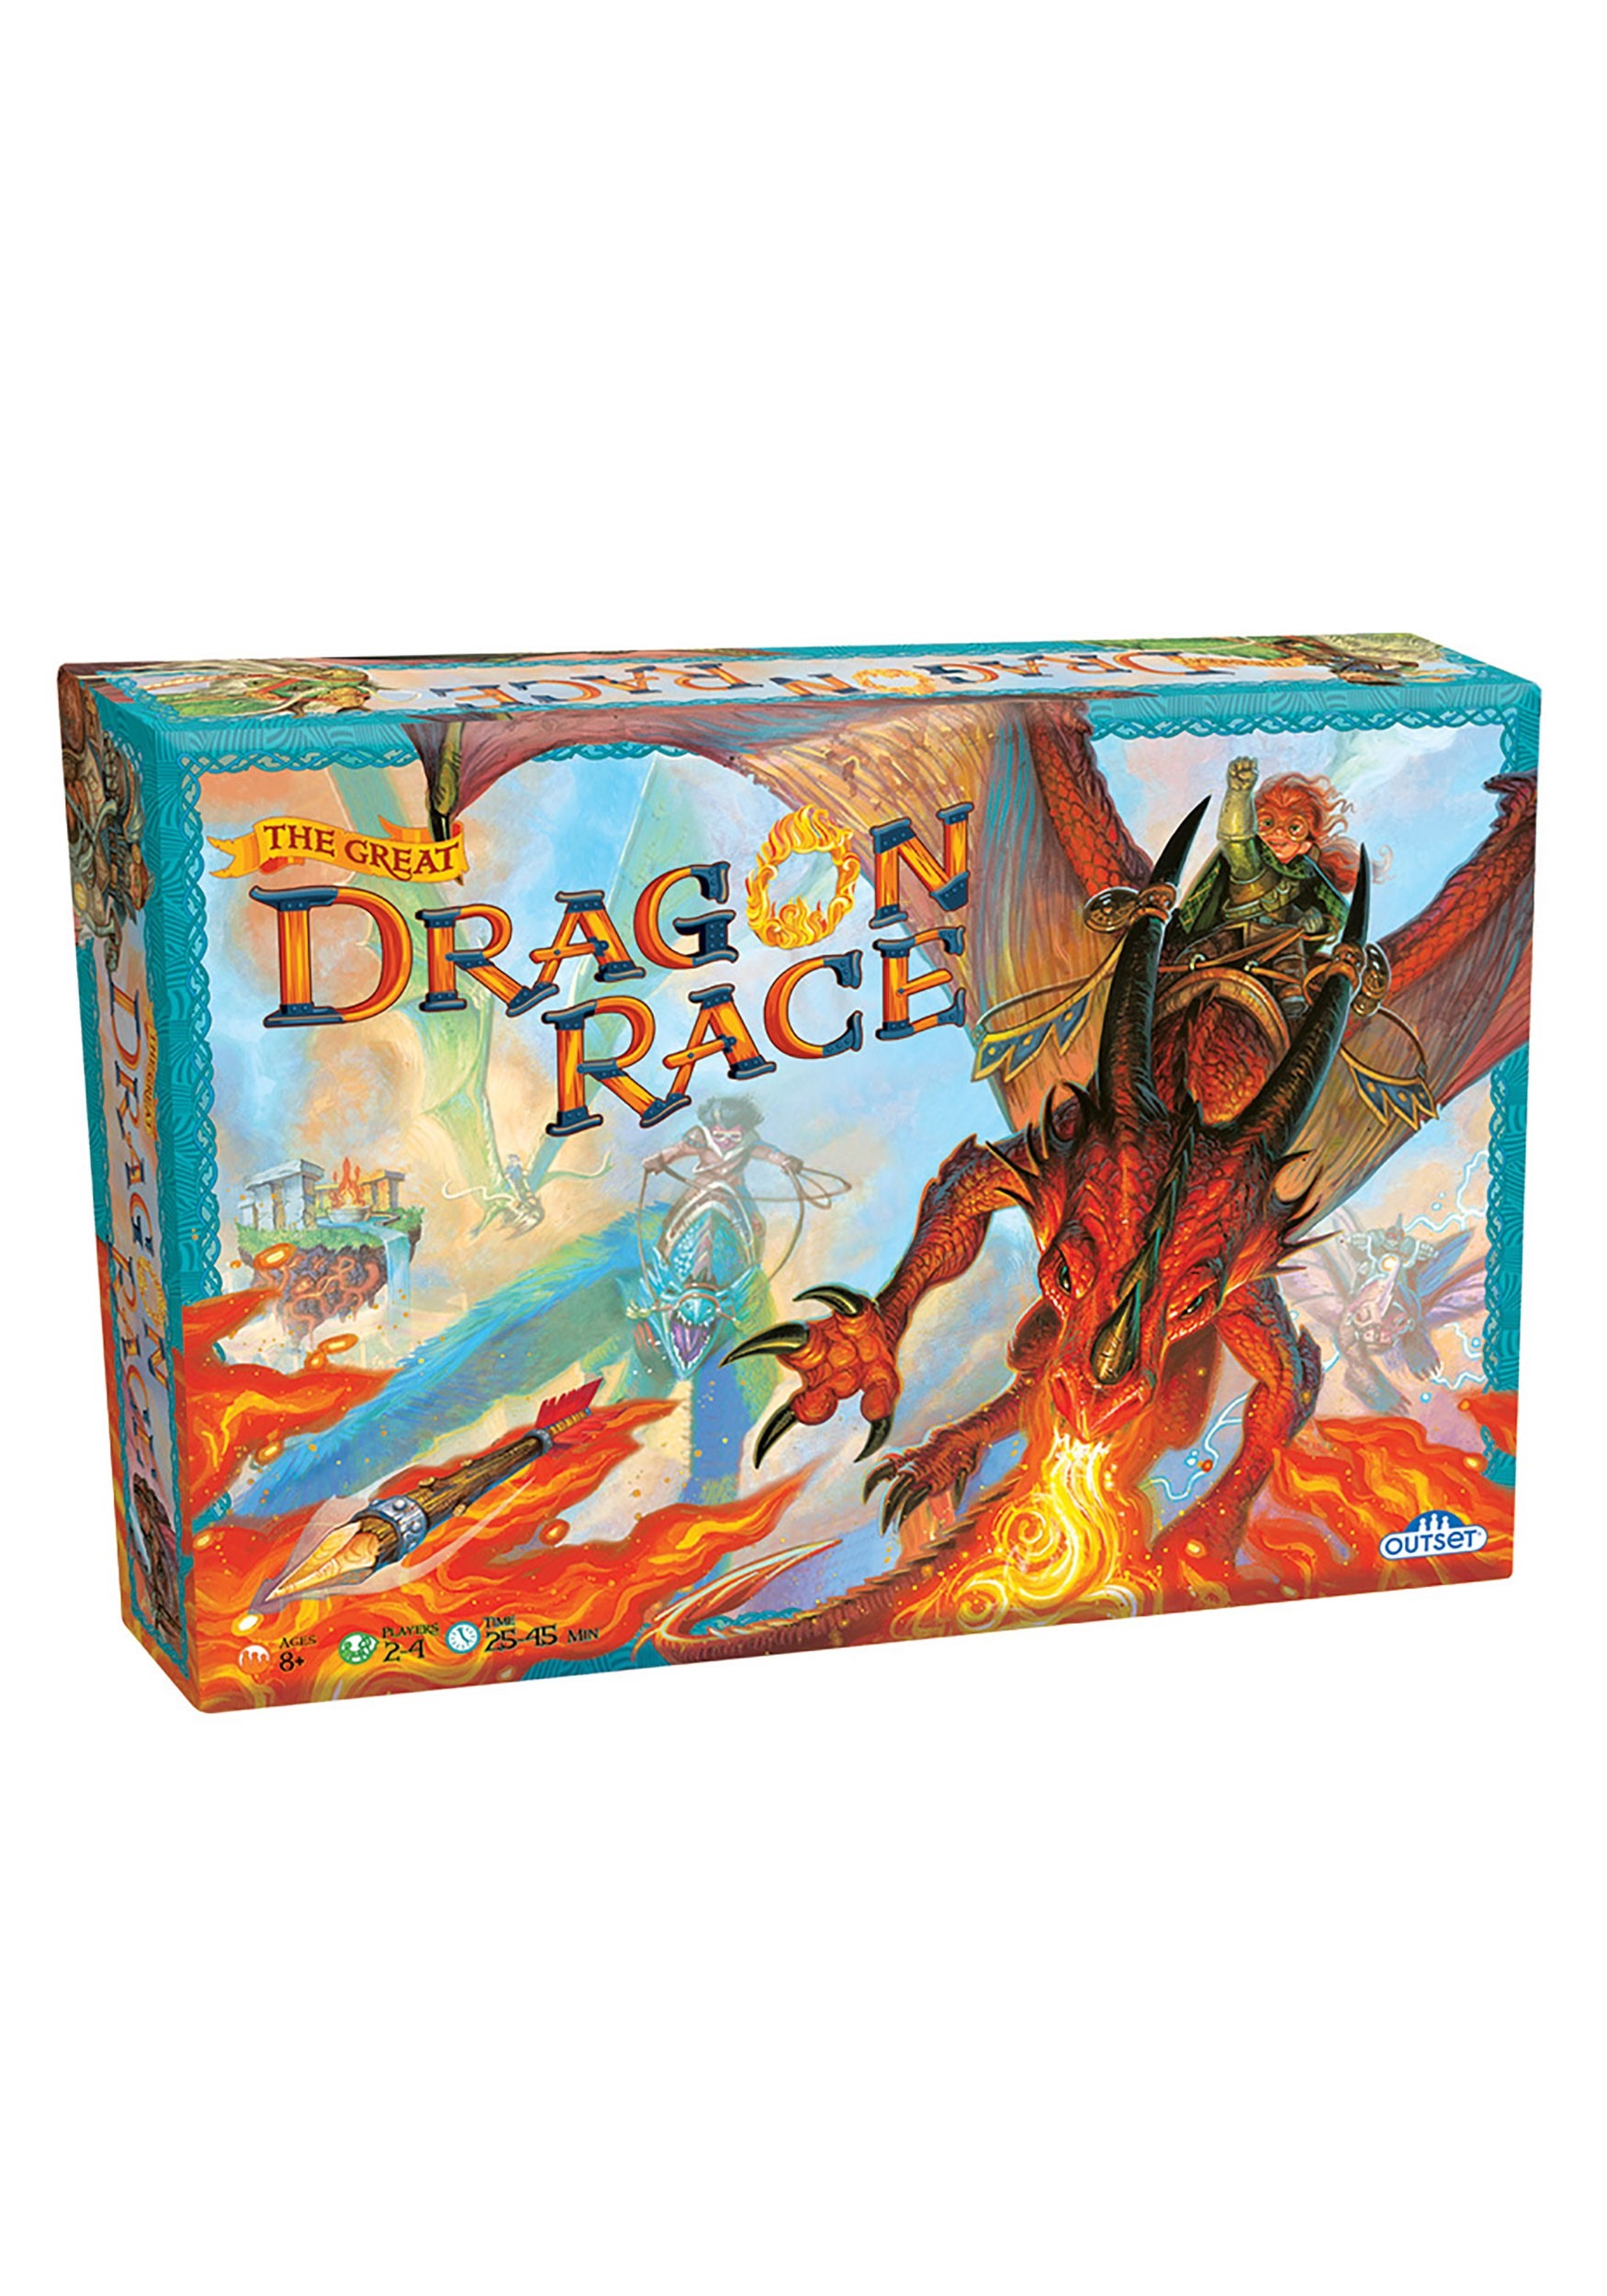 The Great Dragon Race: Board Game